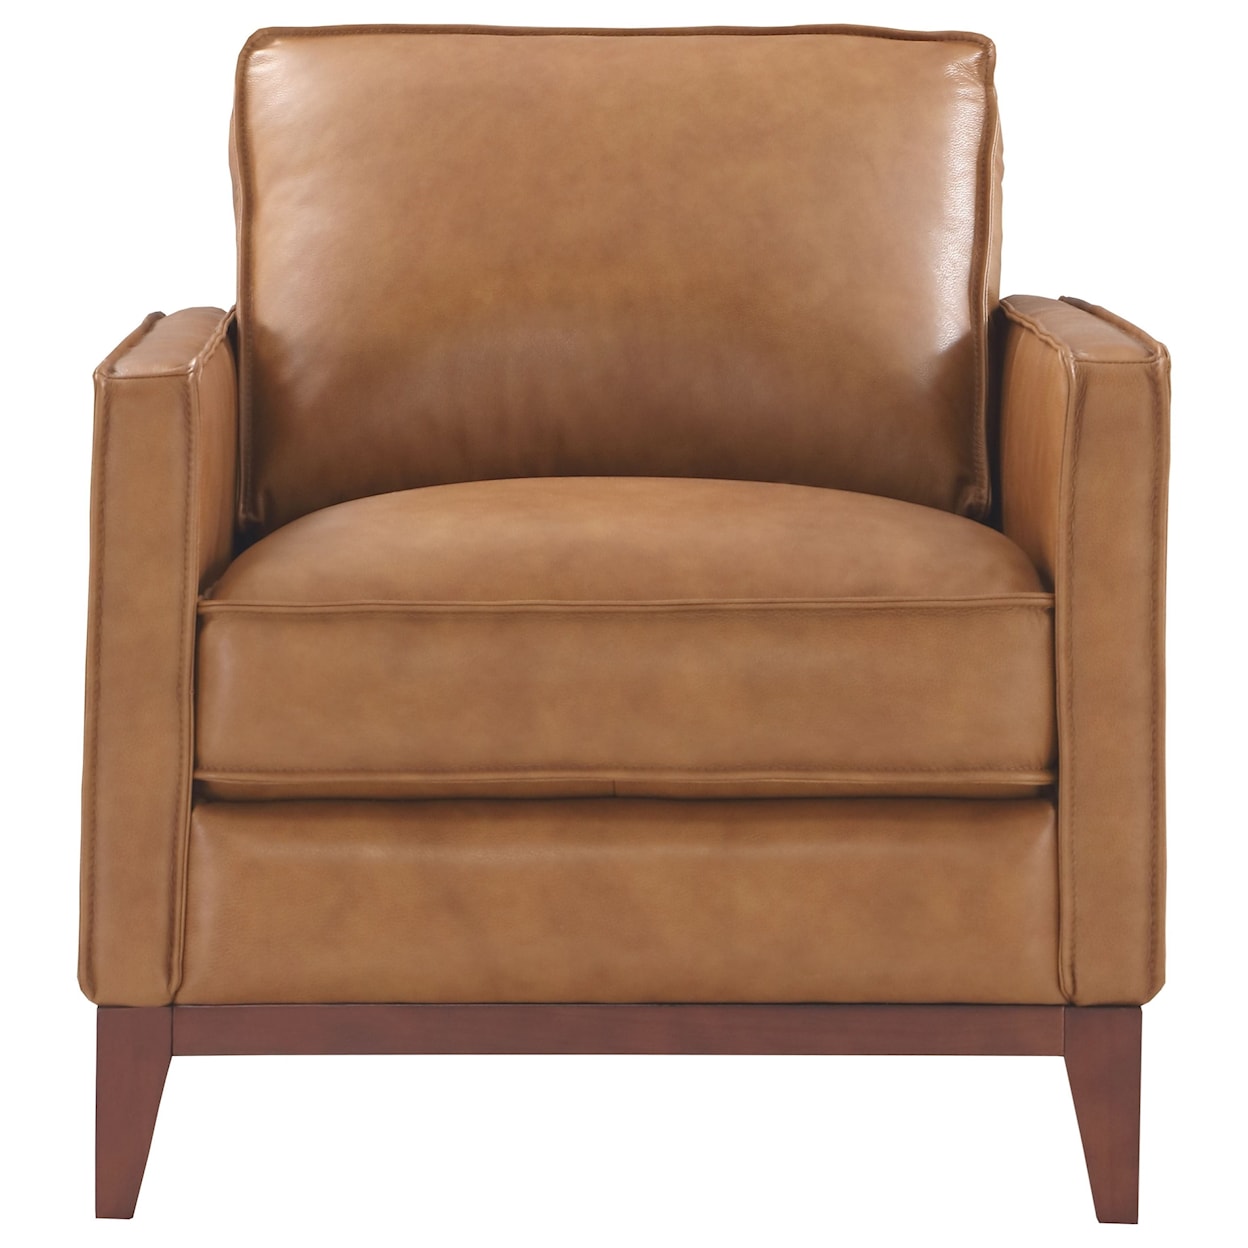 Leather Italia USA Newport Chair and Ottoman